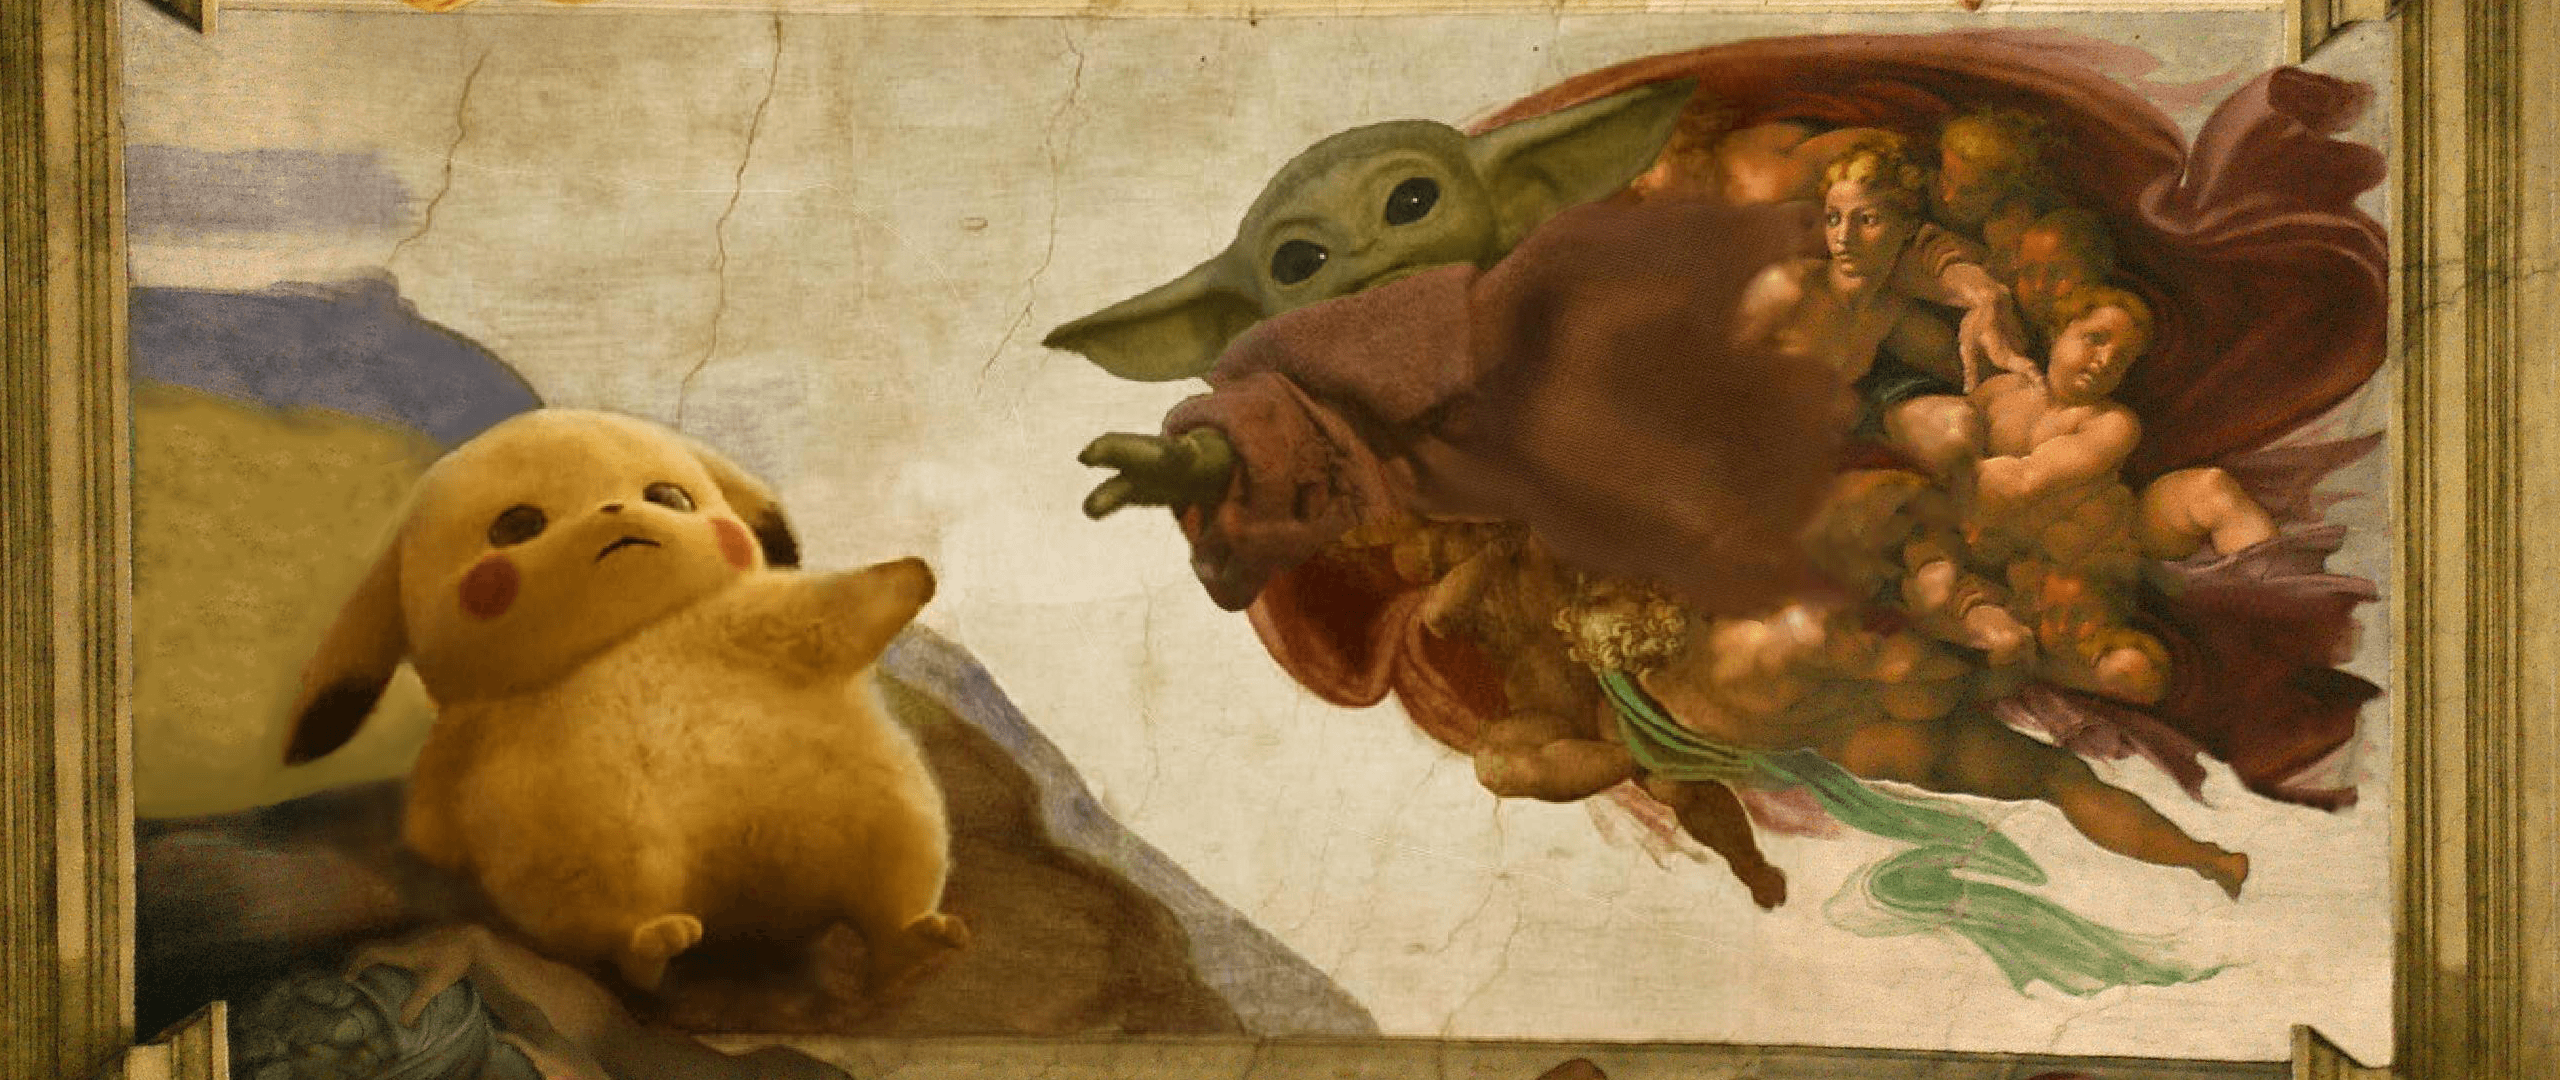 Baby Yoda and Pikachu Ultrawide Wallpaper